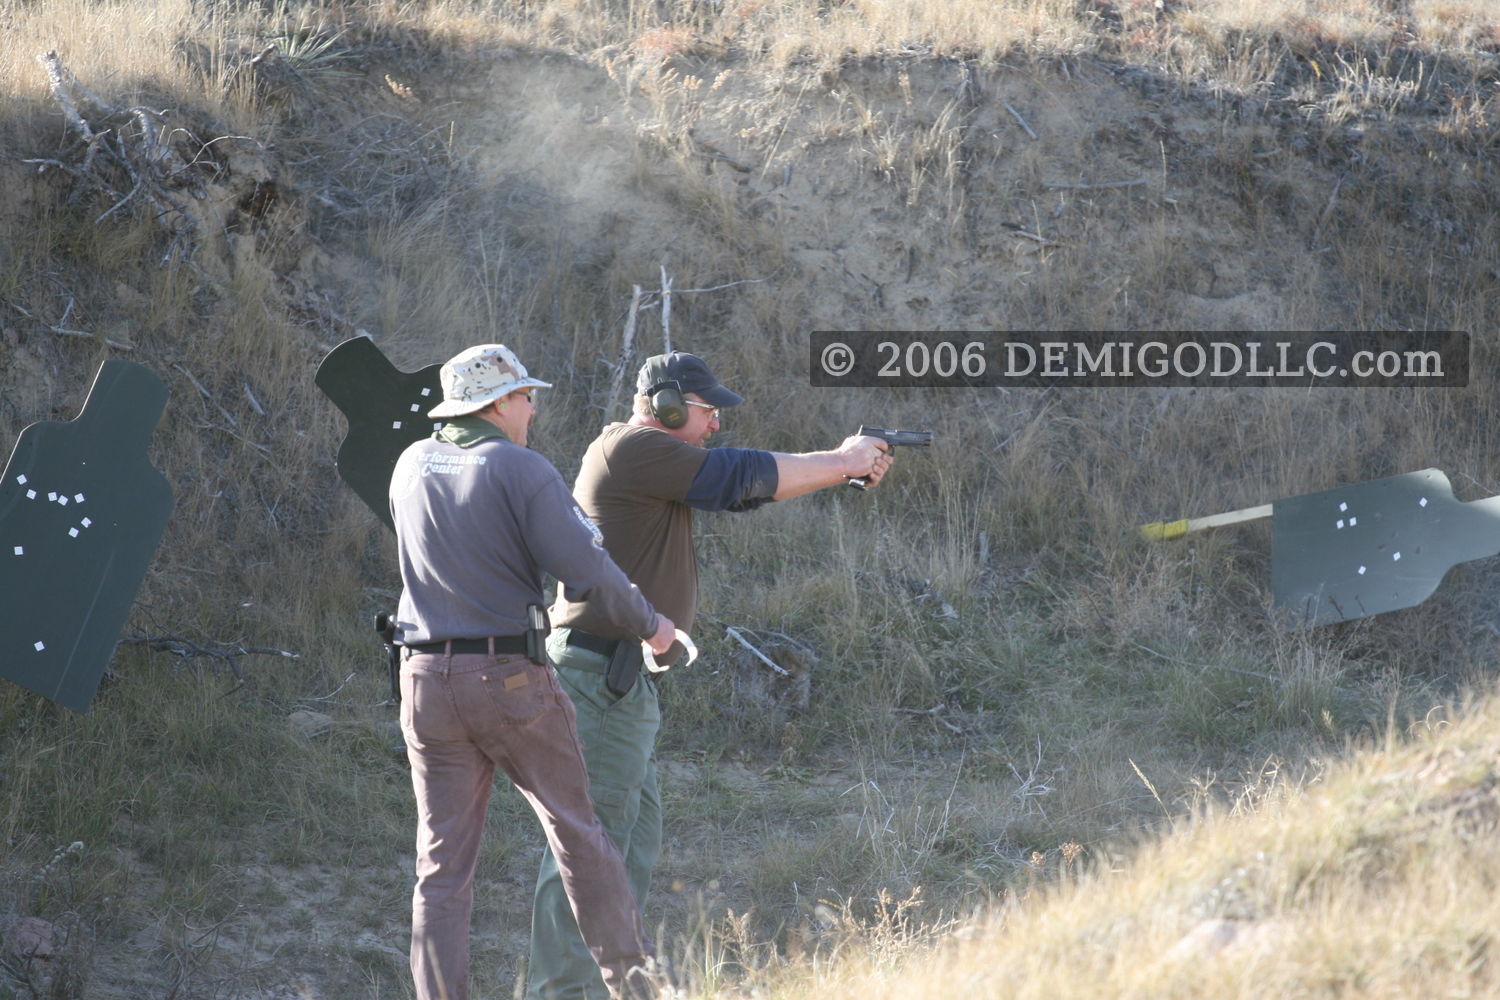 Colorado Multi-Gun match at Camp Guernsery ARNG Base 11/2006 - Match
, photo 